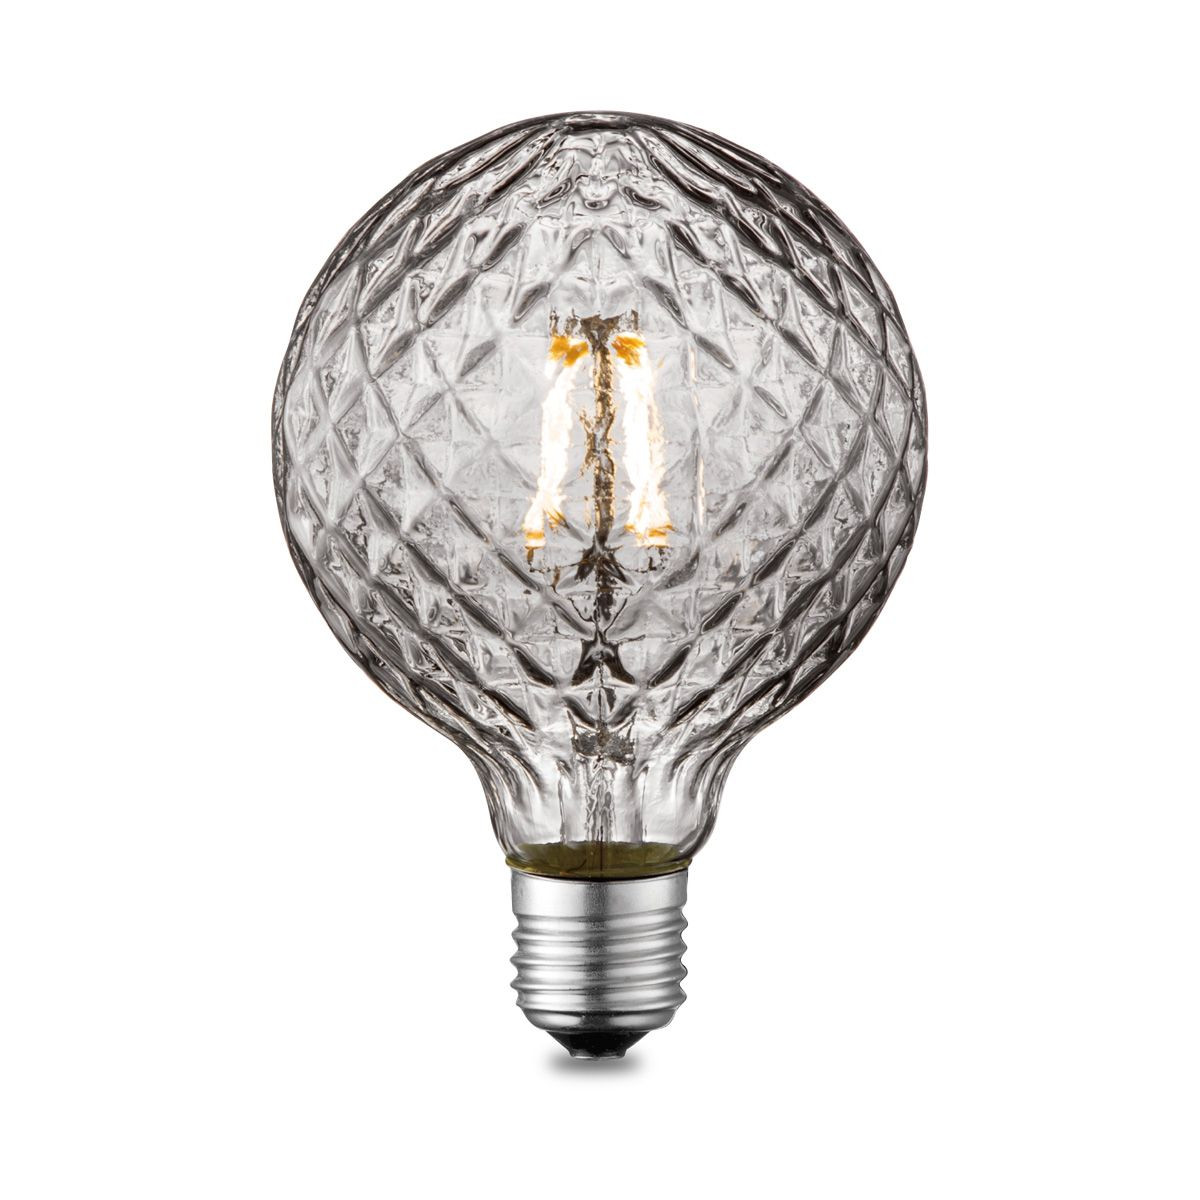 Edison Vintage LED lamp E27 LED filament lichtbron, Deco Globe G95, 9.5/9.5/13.5cm, Rook, Retro LED lamp Dimbaar, 4W 150lm 1800K, warm wit licht, geschikt voor E27 fitting